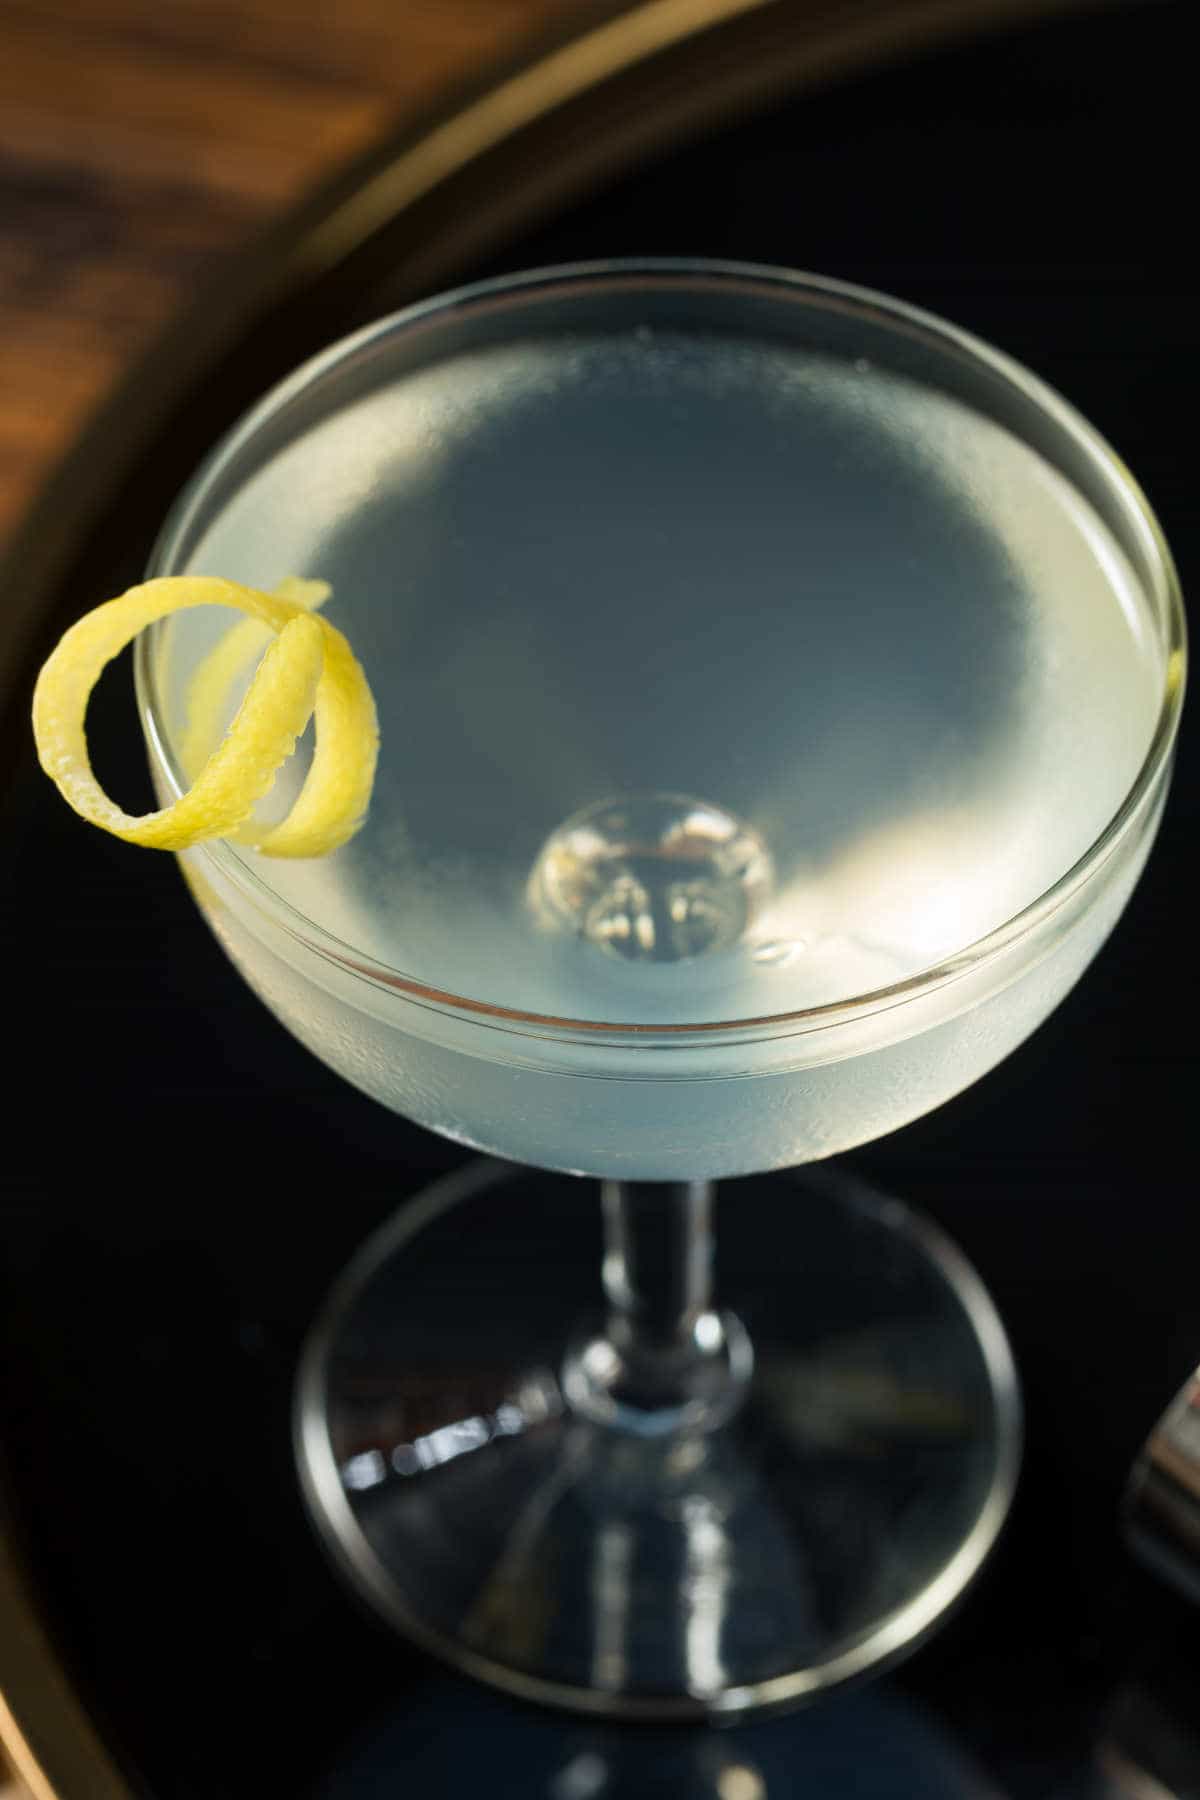 Casino Royale Vesper Martini with a twist of lemon on a black serving tray.